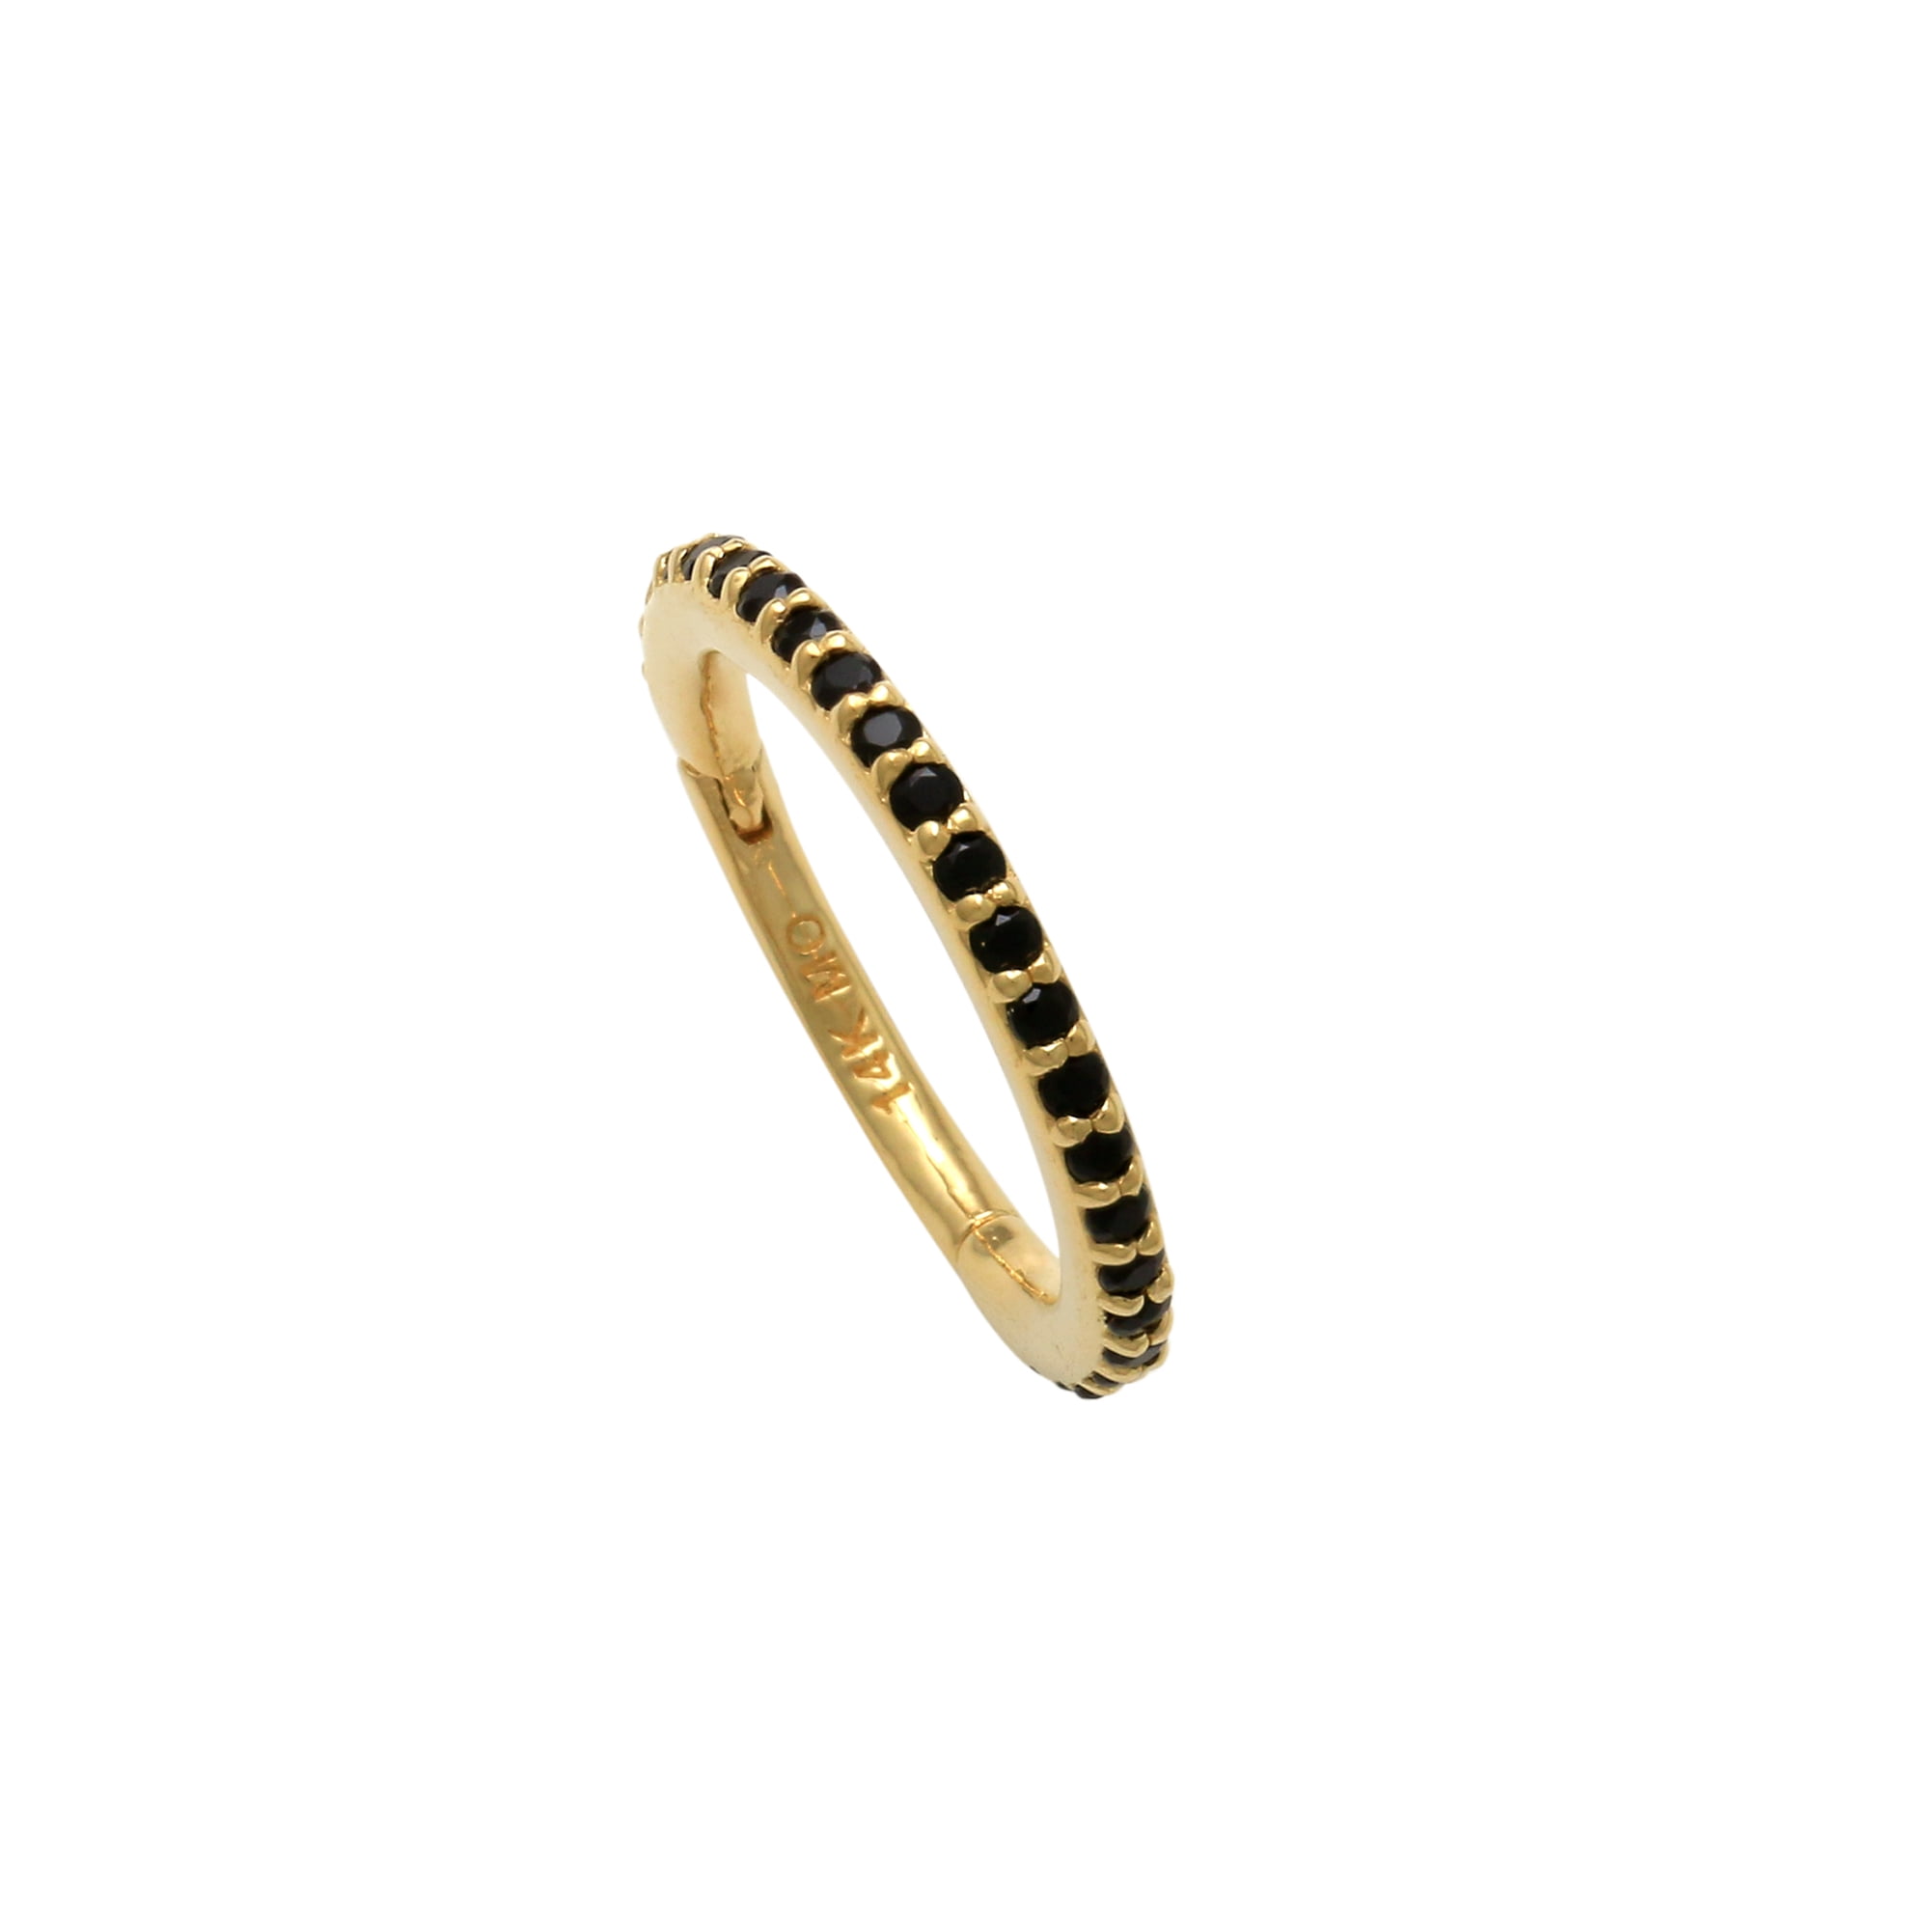 14K REAL Solid Gold CZ Hoop Earring Body Clicker Ring Piercing Jewelry 16 Gauge